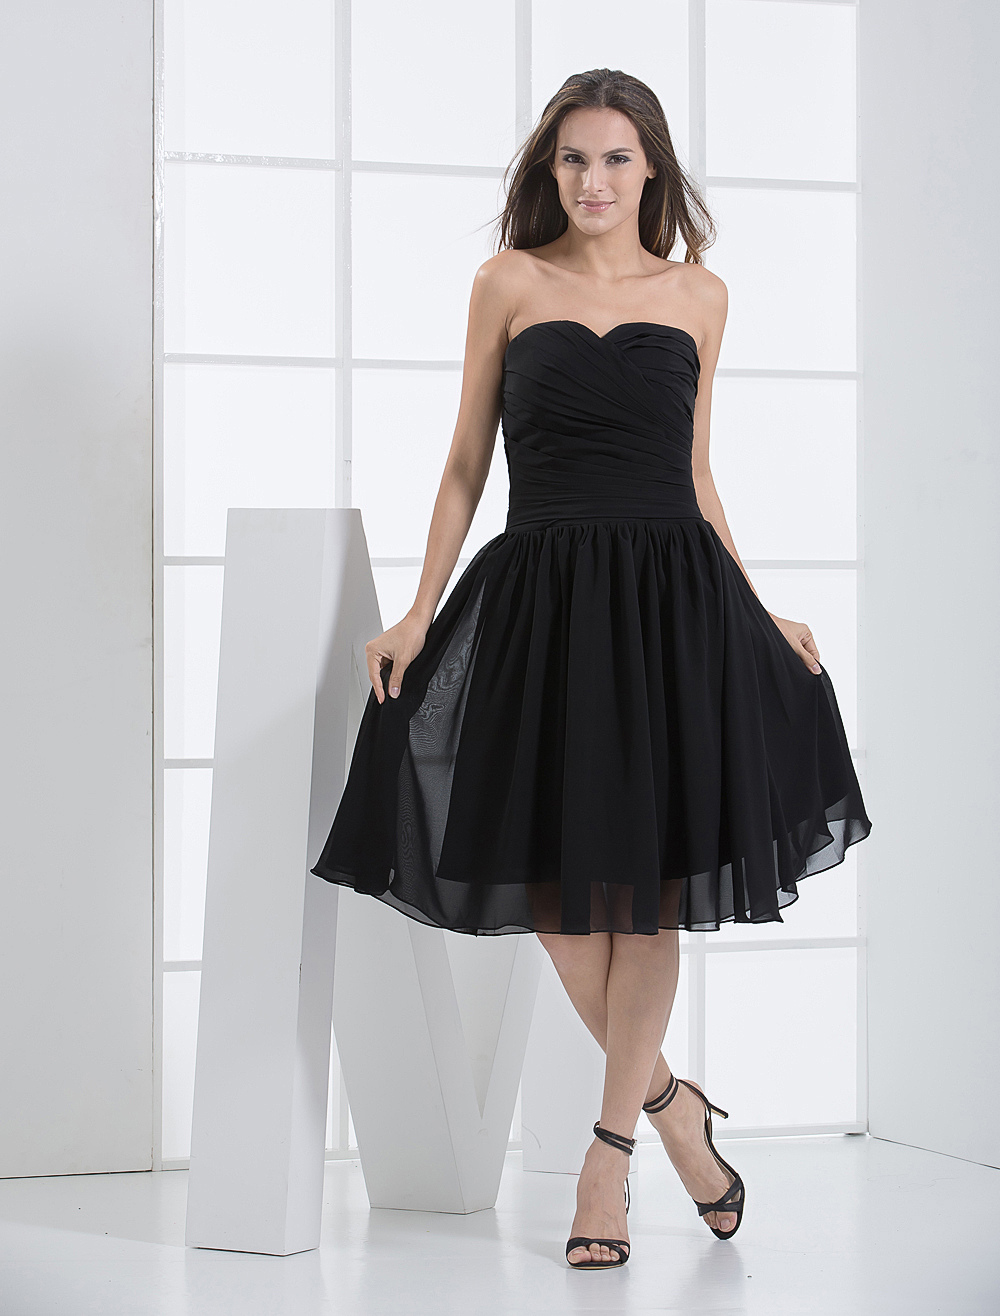 Sweet Black Chiffon Sweetheart Knee Length Cocktail Dress - Milanoo.com